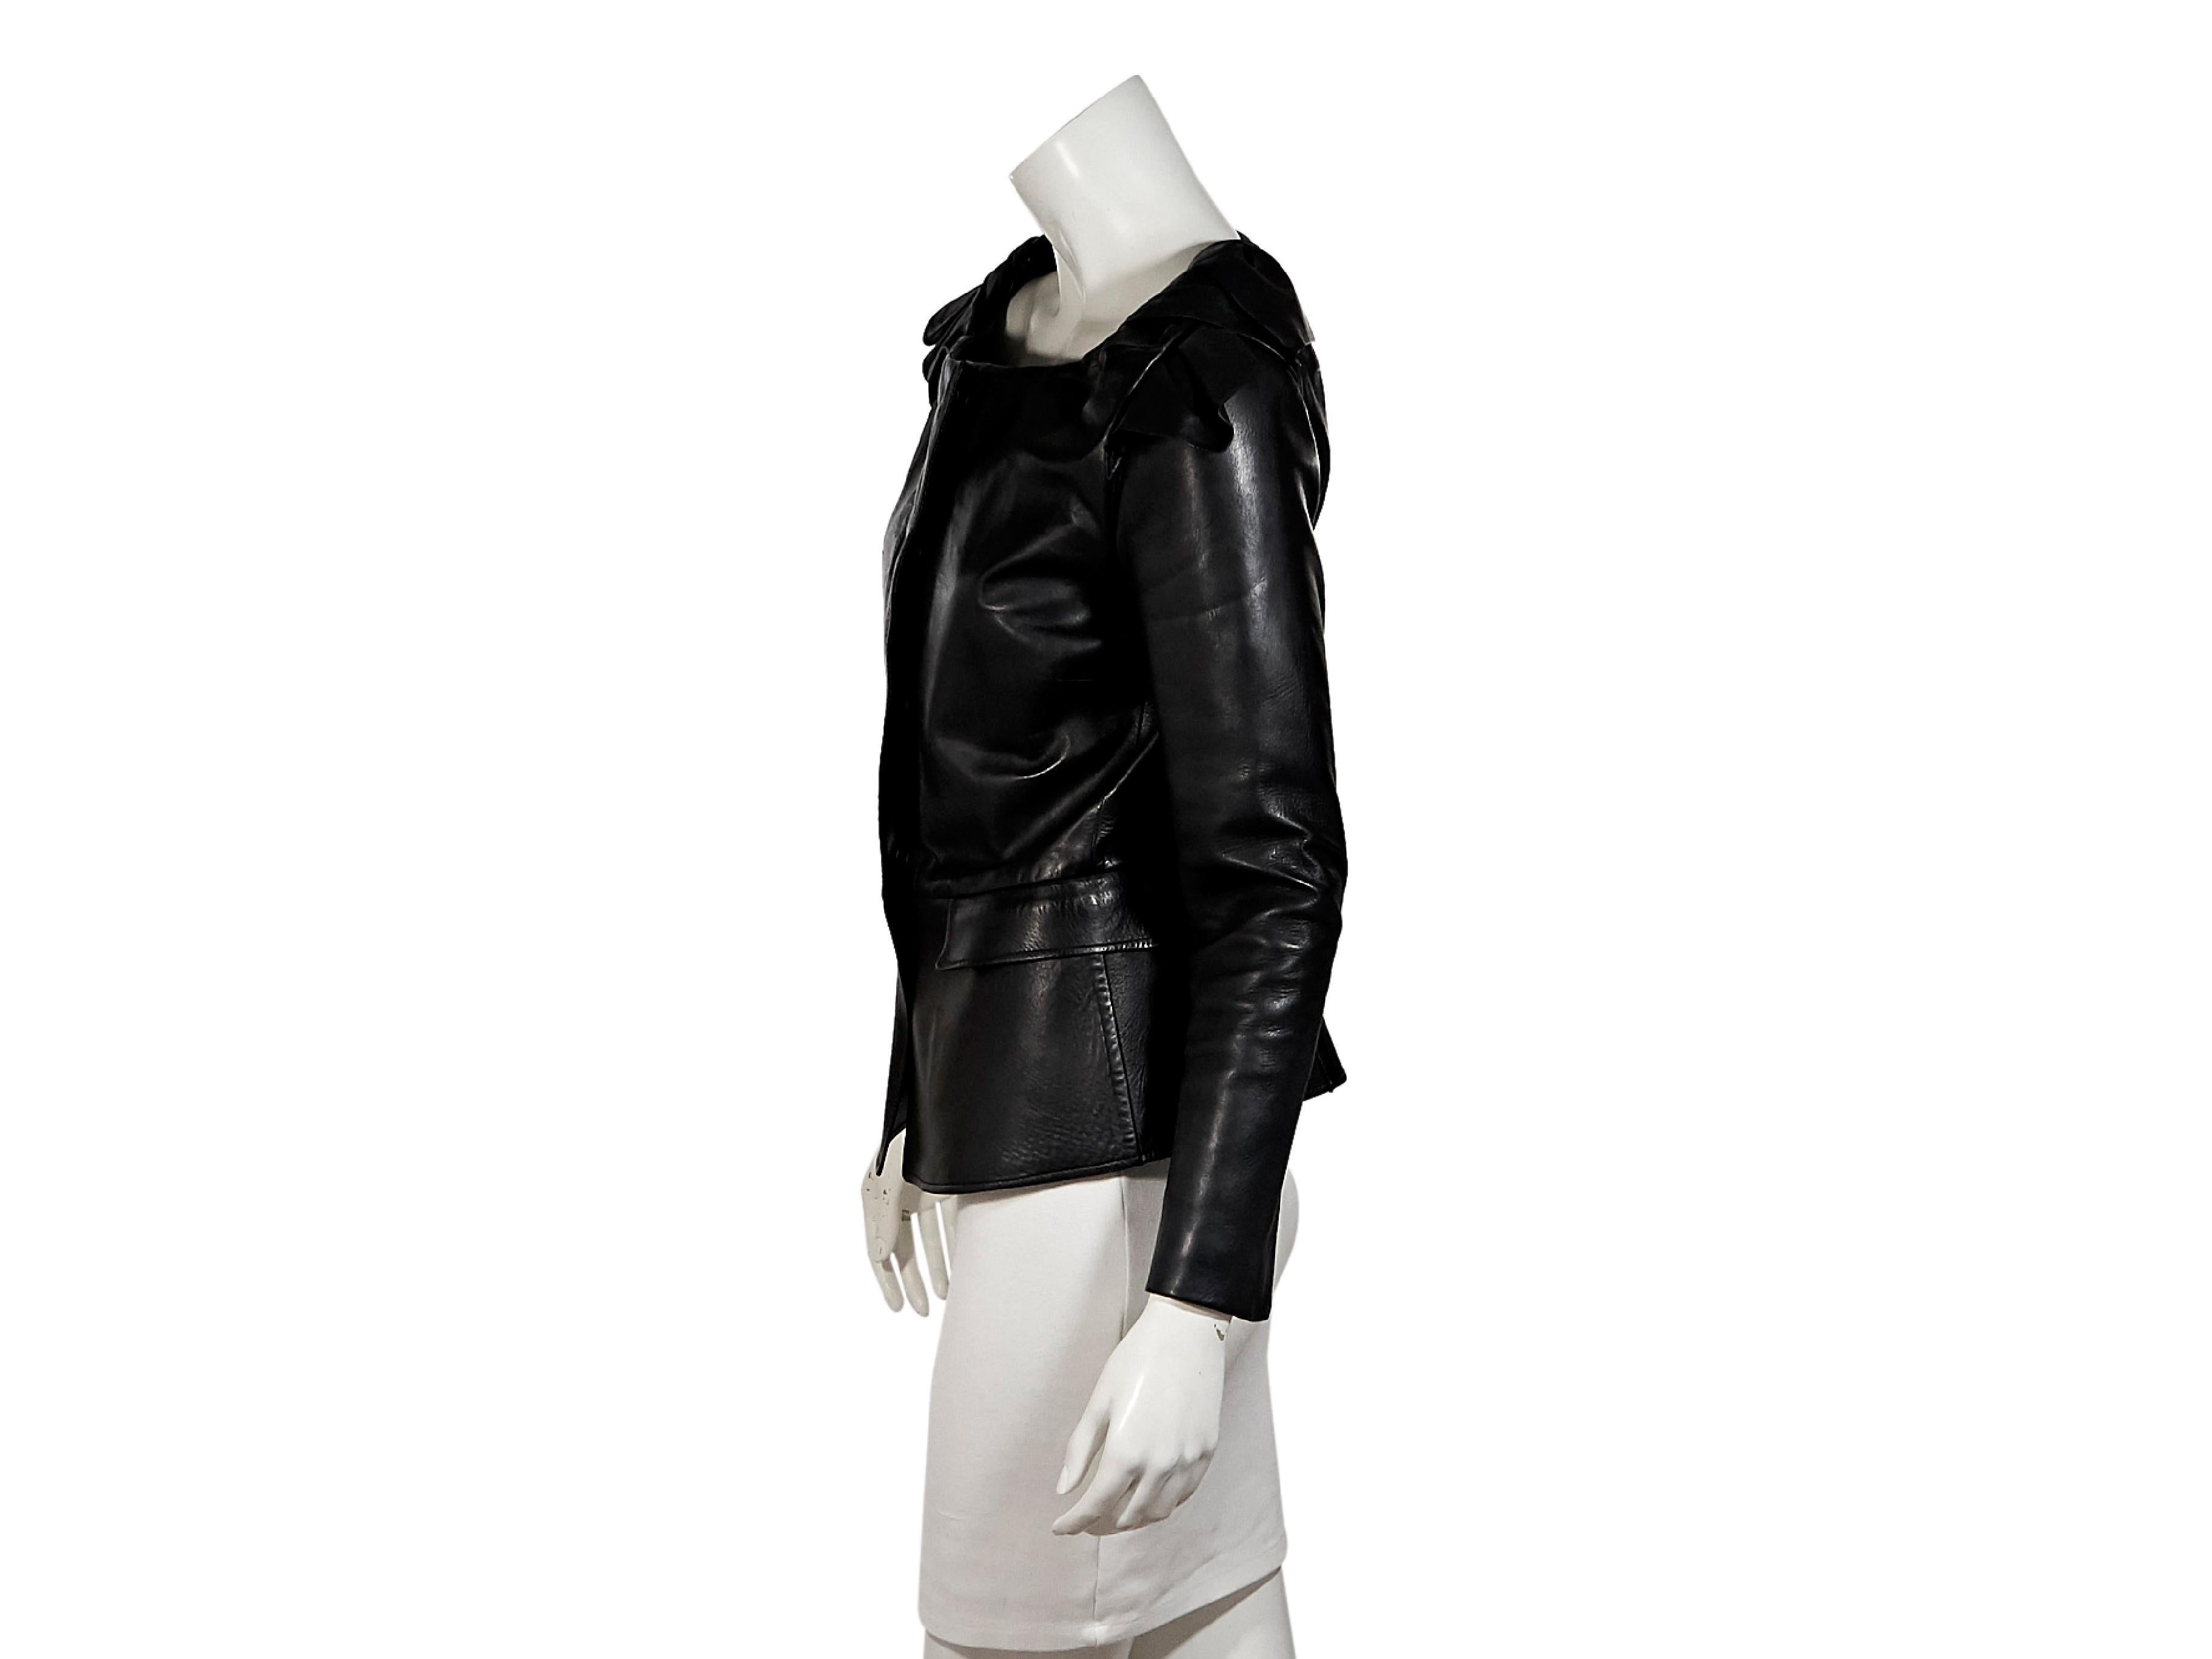 Product details:  Black leather jacket by Burberry Prorsum.  Boatneck.  Off-the-shoulder collar details.  Long sleeves.  Concealed snap-front closure.  Waist flap pockets.  Pleated back hem.  34